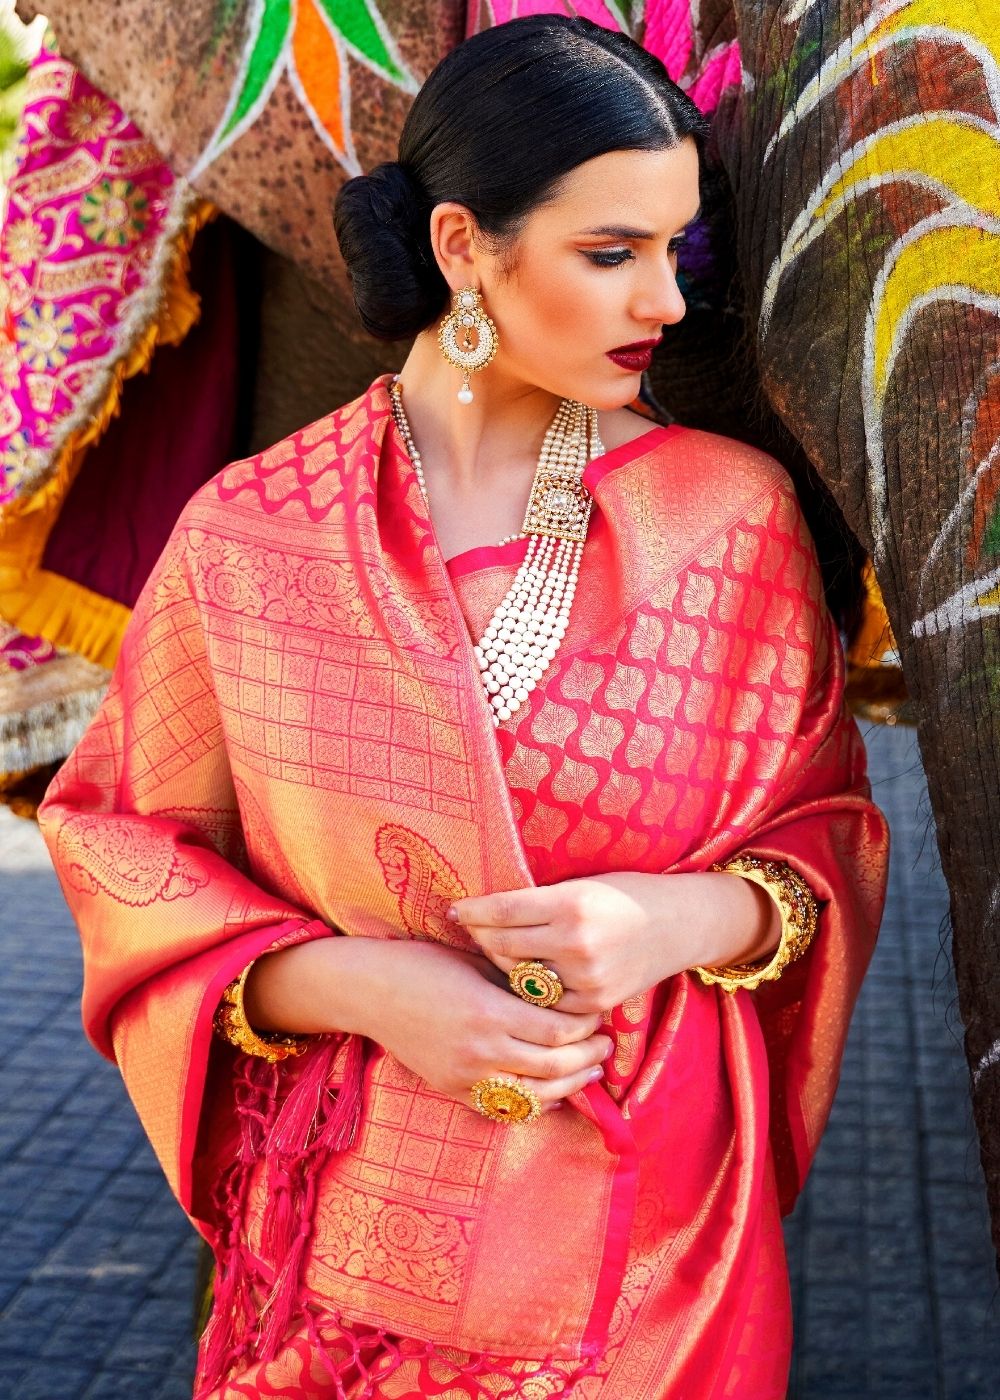 Hot Pink Handloom Weave Kanjivaram Silk Saree